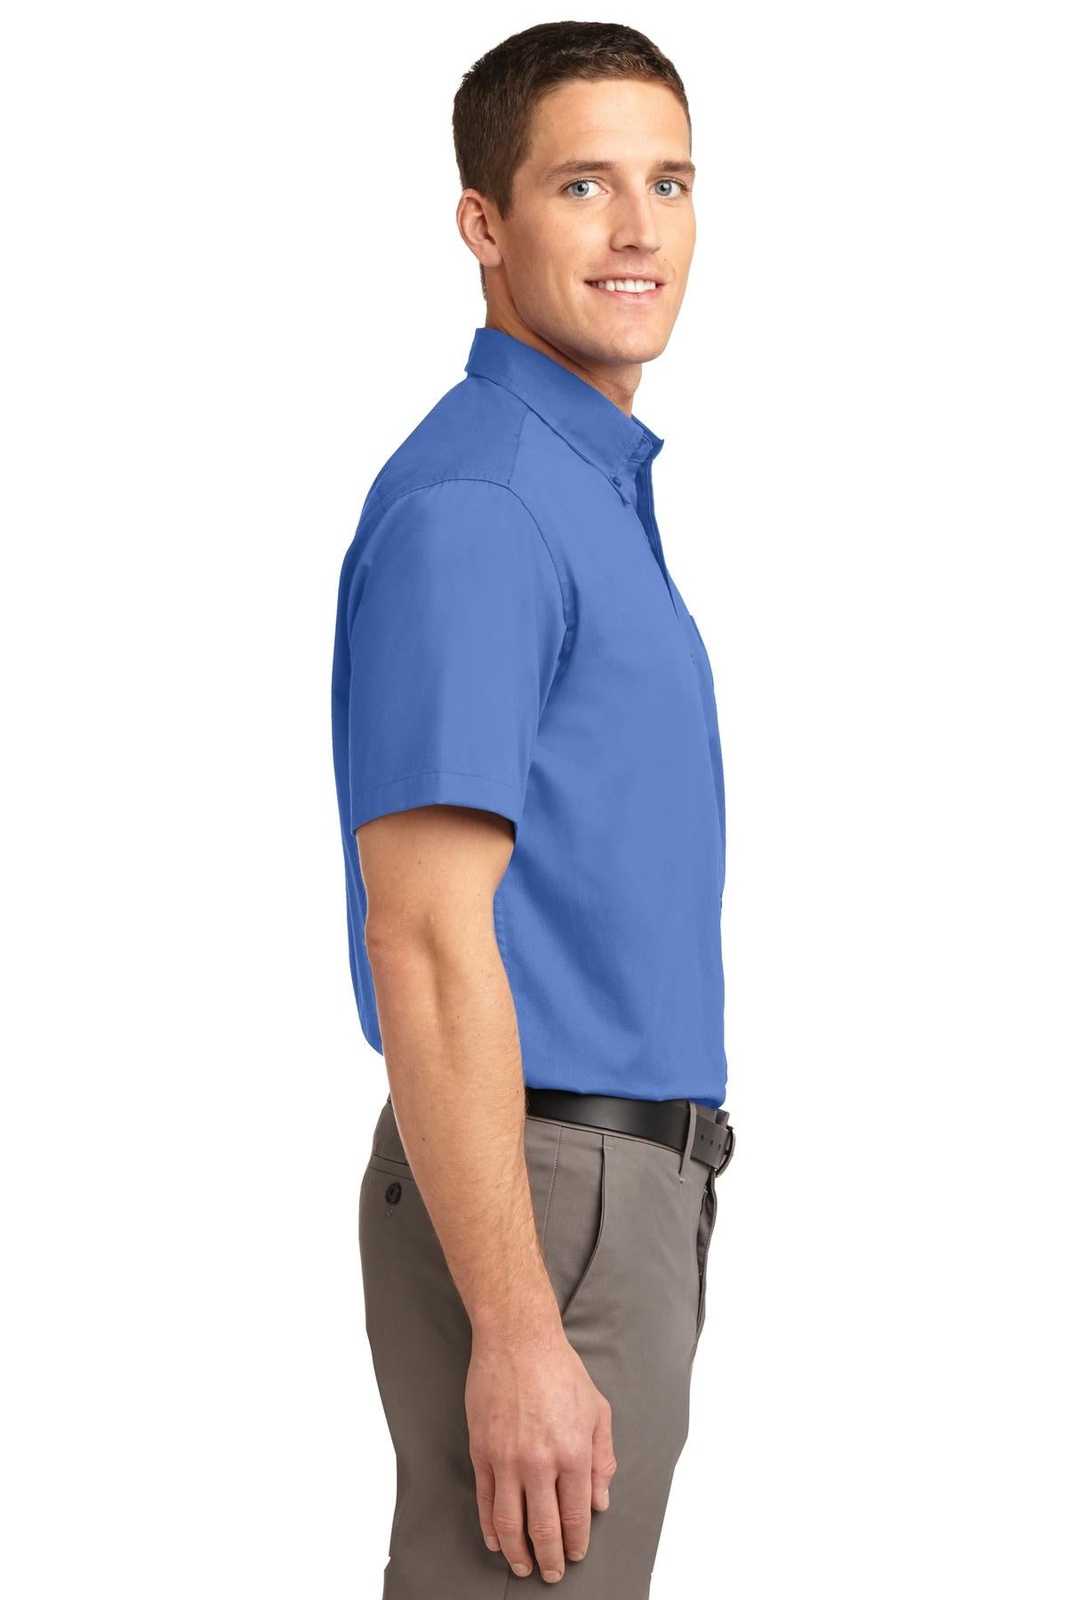 Port Authority S508 Short Sleeve Easy Care Shirt - Ultramarine Blue - HIT a Double - 3